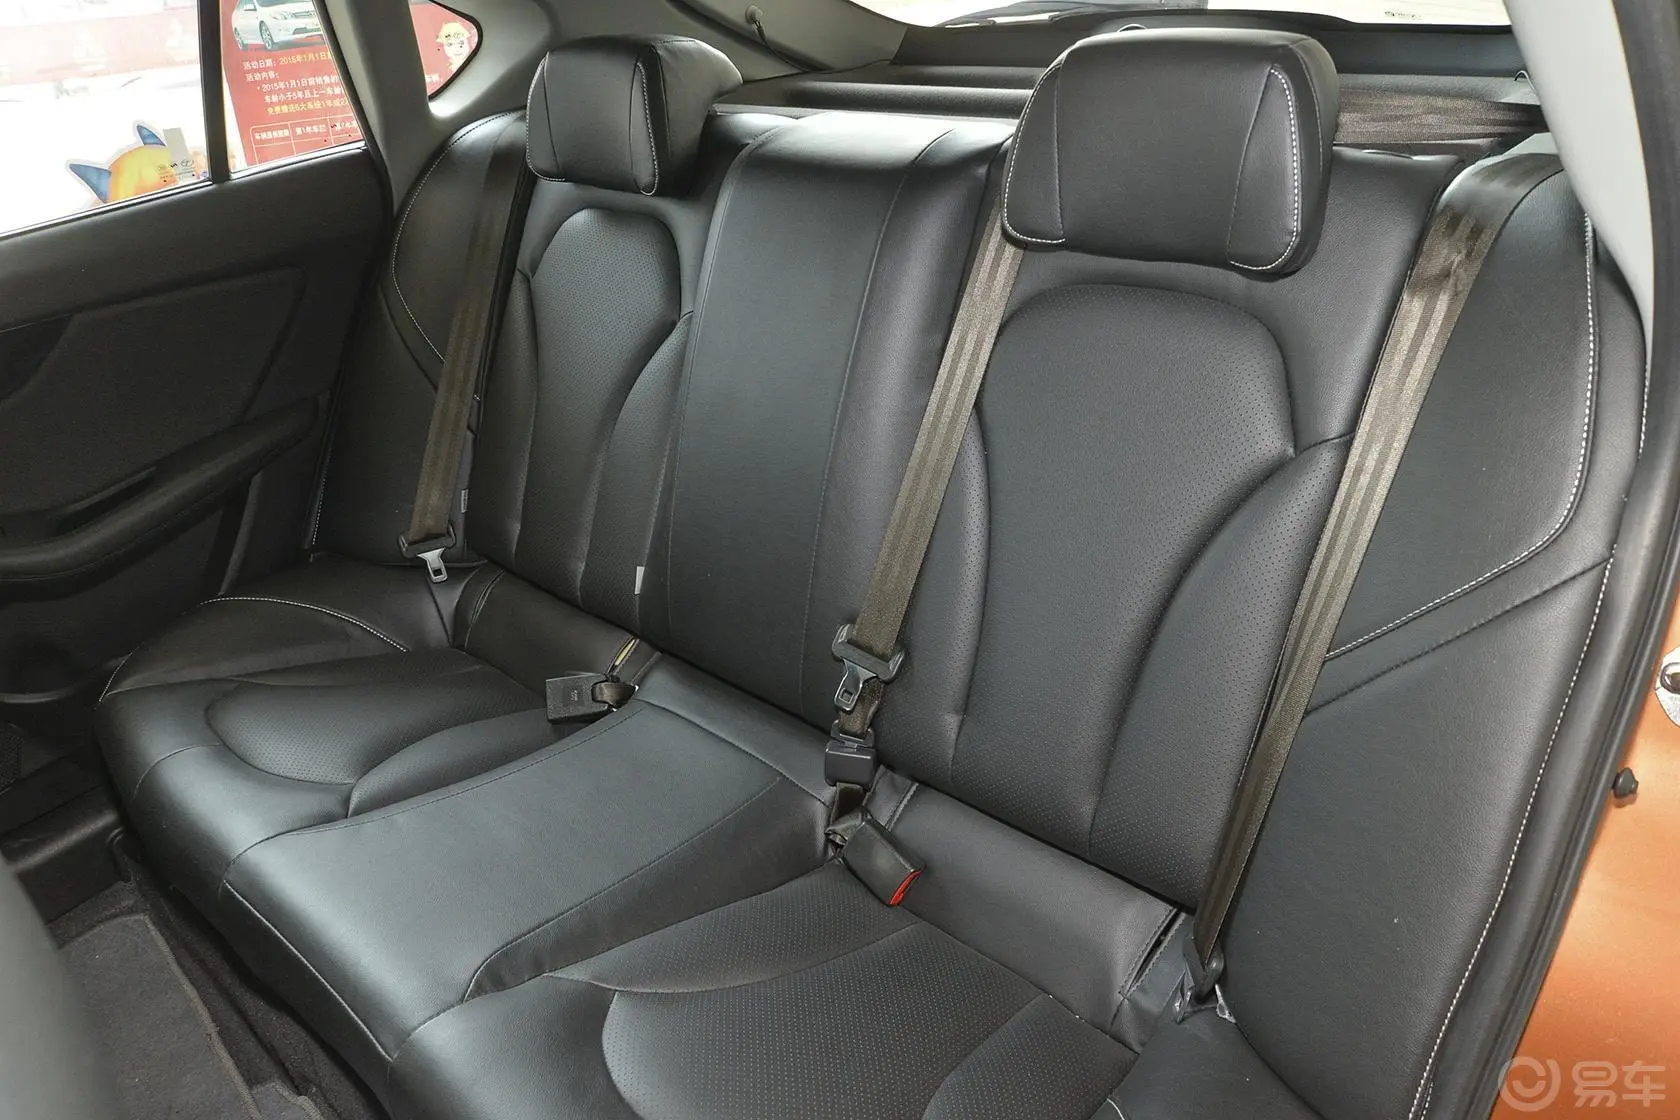 V6菱仕CROSS 1.5L 手动 智尊版后排座椅